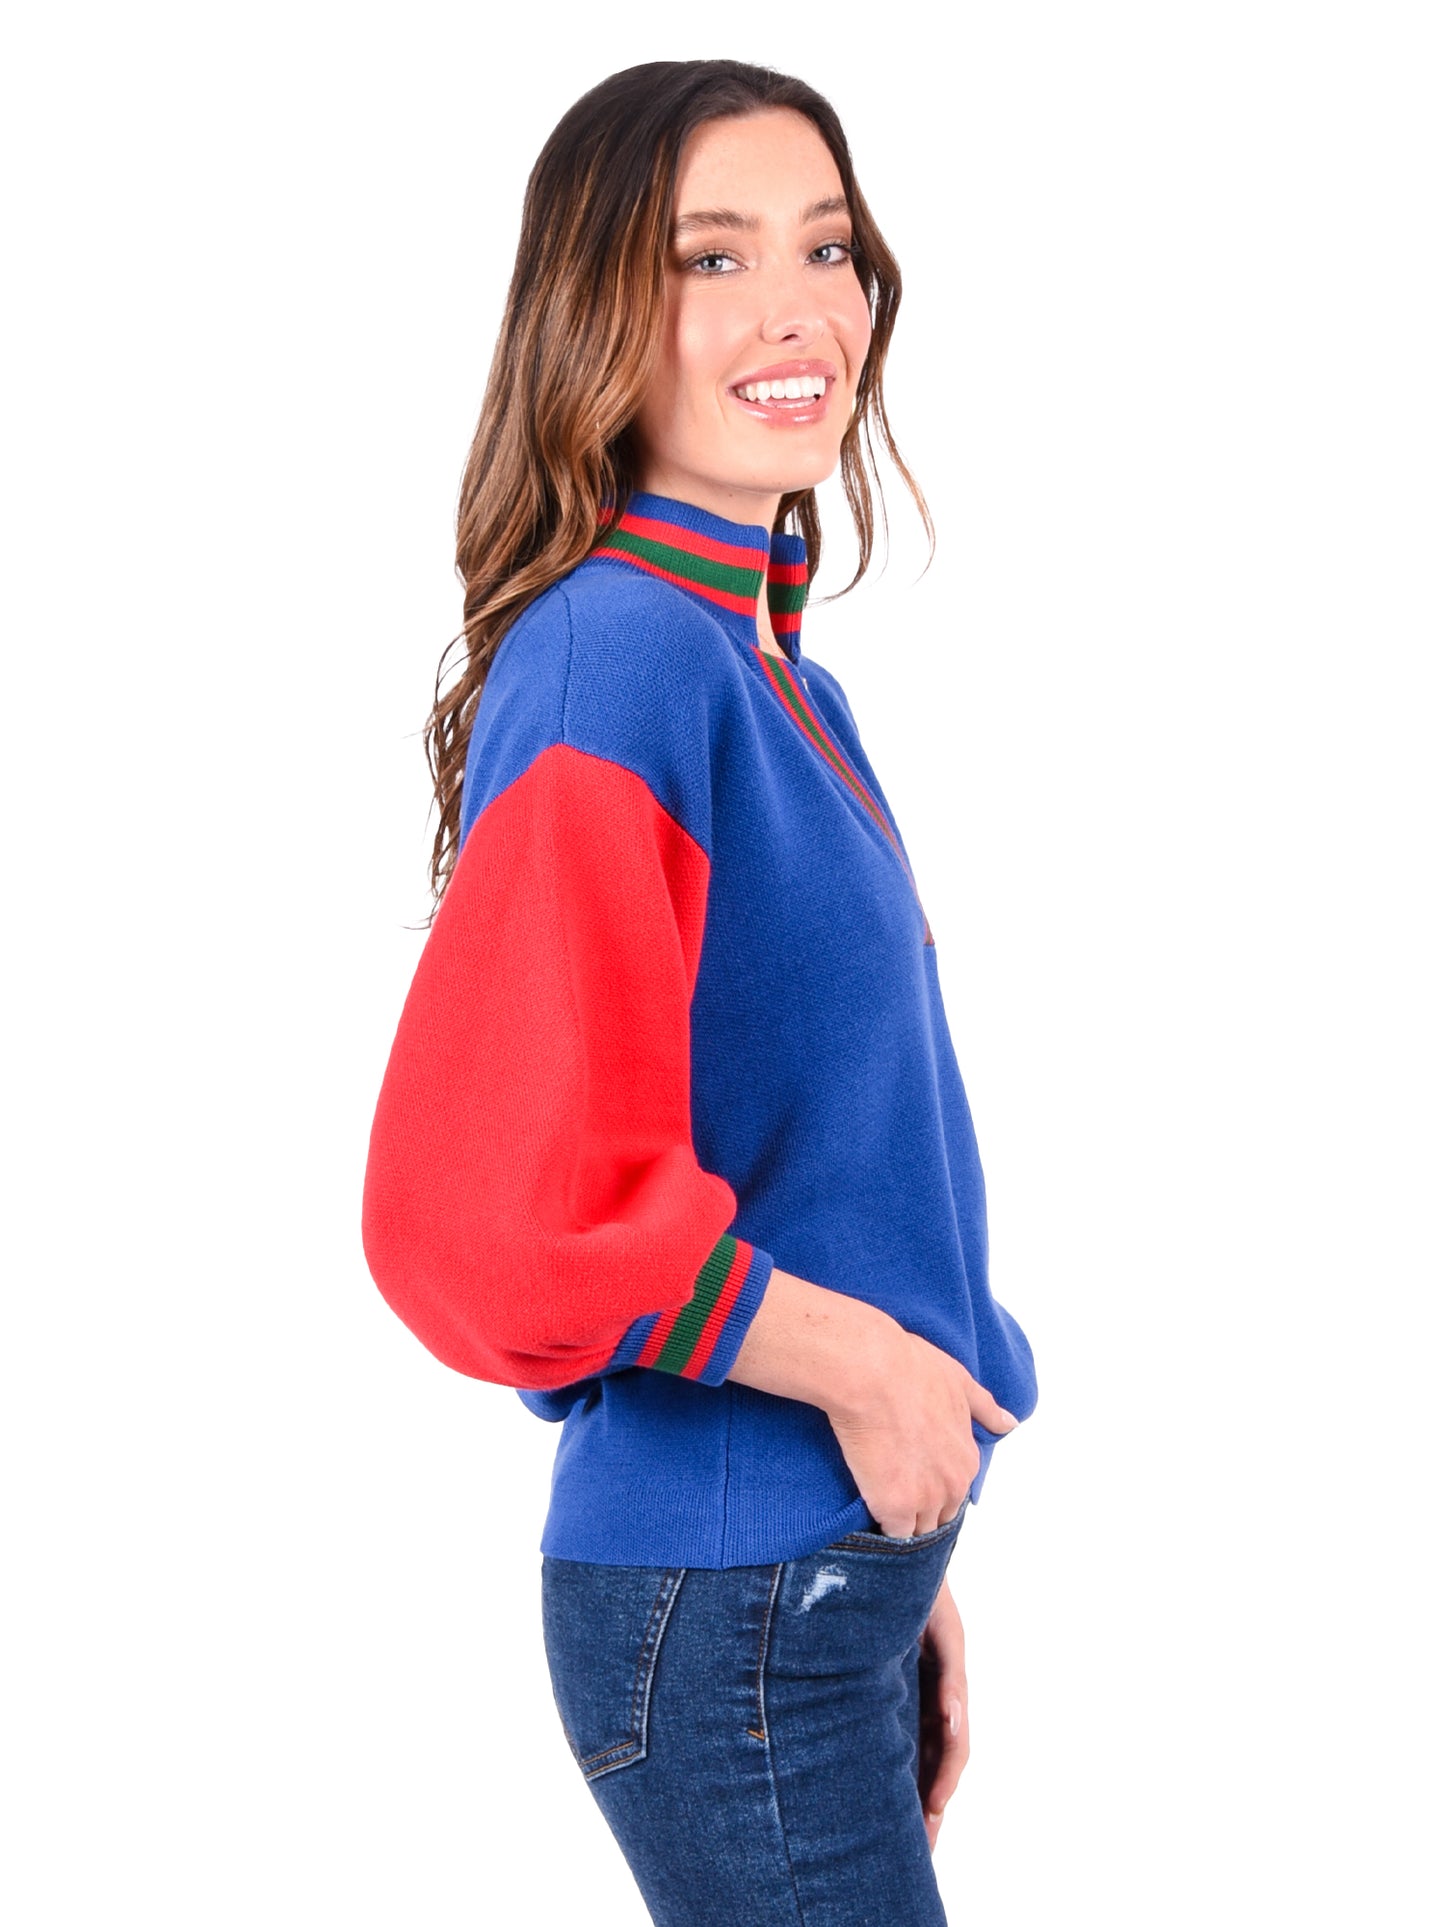 Lolli Sweater - Fall Colorblock